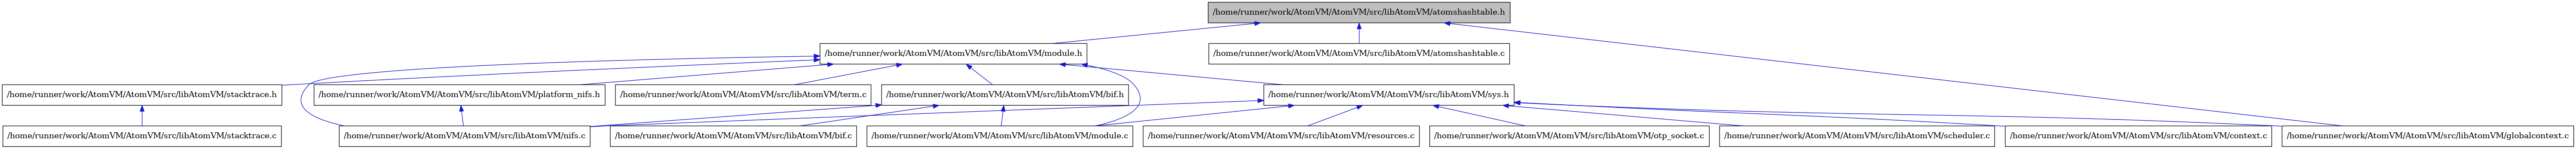 digraph {
    graph [bgcolor="#00000000"]
    node [shape=rectangle style=filled fillcolor="#FFFFFF" font=Helvetica padding=2]
    edge [color="#1414CE"]
    "6" [label="/home/runner/work/AtomVM/AtomVM/src/libAtomVM/bif.c" tooltip="/home/runner/work/AtomVM/AtomVM/src/libAtomVM/bif.c"]
    "5" [label="/home/runner/work/AtomVM/AtomVM/src/libAtomVM/bif.h" tooltip="/home/runner/work/AtomVM/AtomVM/src/libAtomVM/bif.h"]
    "9" [label="/home/runner/work/AtomVM/AtomVM/src/libAtomVM/platform_nifs.h" tooltip="/home/runner/work/AtomVM/AtomVM/src/libAtomVM/platform_nifs.h"]
    "16" [label="/home/runner/work/AtomVM/AtomVM/src/libAtomVM/scheduler.c" tooltip="/home/runner/work/AtomVM/AtomVM/src/libAtomVM/scheduler.c"]
    "13" [label="/home/runner/work/AtomVM/AtomVM/src/libAtomVM/context.c" tooltip="/home/runner/work/AtomVM/AtomVM/src/libAtomVM/context.c"]
    "11" [label="/home/runner/work/AtomVM/AtomVM/src/libAtomVM/stacktrace.c" tooltip="/home/runner/work/AtomVM/AtomVM/src/libAtomVM/stacktrace.c"]
    "10" [label="/home/runner/work/AtomVM/AtomVM/src/libAtomVM/stacktrace.h" tooltip="/home/runner/work/AtomVM/AtomVM/src/libAtomVM/stacktrace.h"]
    "7" [label="/home/runner/work/AtomVM/AtomVM/src/libAtomVM/module.c" tooltip="/home/runner/work/AtomVM/AtomVM/src/libAtomVM/module.c"]
    "4" [label="/home/runner/work/AtomVM/AtomVM/src/libAtomVM/module.h" tooltip="/home/runner/work/AtomVM/AtomVM/src/libAtomVM/module.h"]
    "17" [label="/home/runner/work/AtomVM/AtomVM/src/libAtomVM/term.c" tooltip="/home/runner/work/AtomVM/AtomVM/src/libAtomVM/term.c"]
    "15" [label="/home/runner/work/AtomVM/AtomVM/src/libAtomVM/resources.c" tooltip="/home/runner/work/AtomVM/AtomVM/src/libAtomVM/resources.c"]
    "12" [label="/home/runner/work/AtomVM/AtomVM/src/libAtomVM/sys.h" tooltip="/home/runner/work/AtomVM/AtomVM/src/libAtomVM/sys.h"]
    "2" [label="/home/runner/work/AtomVM/AtomVM/src/libAtomVM/atomshashtable.c" tooltip="/home/runner/work/AtomVM/AtomVM/src/libAtomVM/atomshashtable.c"]
    "1" [label="/home/runner/work/AtomVM/AtomVM/src/libAtomVM/atomshashtable.h" tooltip="/home/runner/work/AtomVM/AtomVM/src/libAtomVM/atomshashtable.h" fillcolor="#BFBFBF"]
    "8" [label="/home/runner/work/AtomVM/AtomVM/src/libAtomVM/nifs.c" tooltip="/home/runner/work/AtomVM/AtomVM/src/libAtomVM/nifs.c"]
    "3" [label="/home/runner/work/AtomVM/AtomVM/src/libAtomVM/globalcontext.c" tooltip="/home/runner/work/AtomVM/AtomVM/src/libAtomVM/globalcontext.c"]
    "14" [label="/home/runner/work/AtomVM/AtomVM/src/libAtomVM/otp_socket.c" tooltip="/home/runner/work/AtomVM/AtomVM/src/libAtomVM/otp_socket.c"]
    "5" -> "6" [dir=back tooltip="include"]
    "5" -> "7" [dir=back tooltip="include"]
    "5" -> "8" [dir=back tooltip="include"]
    "9" -> "8" [dir=back tooltip="include"]
    "10" -> "11" [dir=back tooltip="include"]
    "4" -> "5" [dir=back tooltip="include"]
    "4" -> "7" [dir=back tooltip="include"]
    "4" -> "8" [dir=back tooltip="include"]
    "4" -> "9" [dir=back tooltip="include"]
    "4" -> "10" [dir=back tooltip="include"]
    "4" -> "12" [dir=back tooltip="include"]
    "4" -> "17" [dir=back tooltip="include"]
    "12" -> "13" [dir=back tooltip="include"]
    "12" -> "3" [dir=back tooltip="include"]
    "12" -> "7" [dir=back tooltip="include"]
    "12" -> "8" [dir=back tooltip="include"]
    "12" -> "14" [dir=back tooltip="include"]
    "12" -> "15" [dir=back tooltip="include"]
    "12" -> "16" [dir=back tooltip="include"]
    "1" -> "2" [dir=back tooltip="include"]
    "1" -> "3" [dir=back tooltip="include"]
    "1" -> "4" [dir=back tooltip="include"]
}